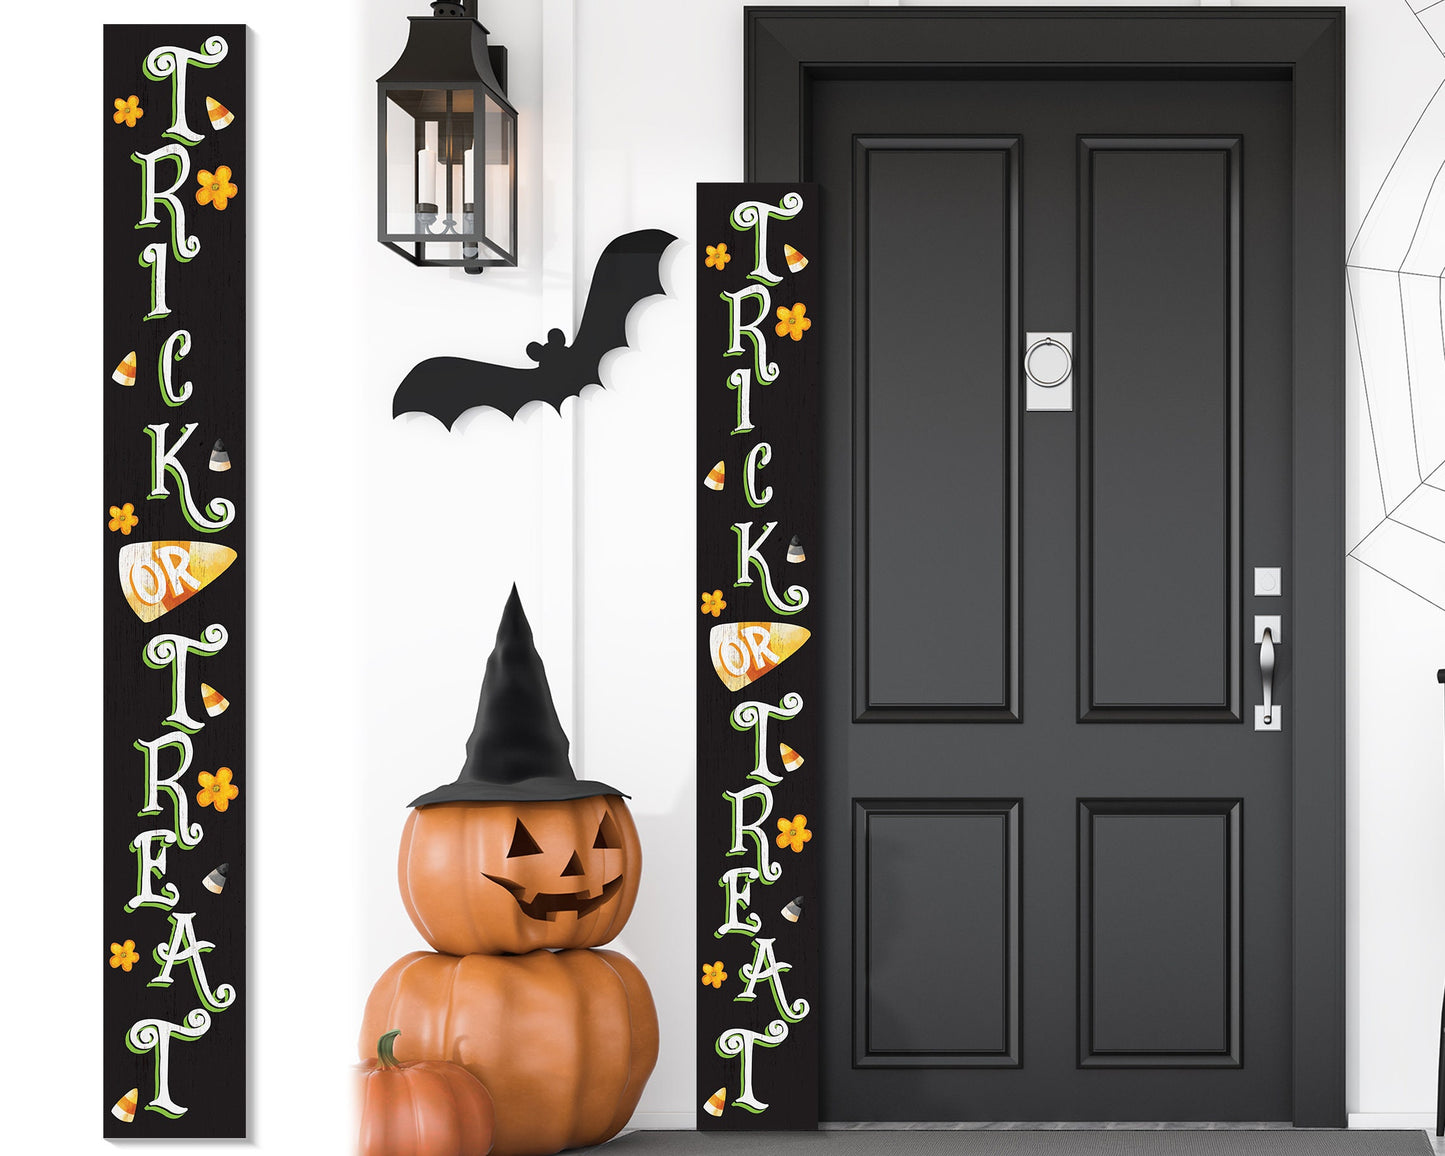 72in Halloween Porch Sign - Spooky Trick or Treat Front Door Decor